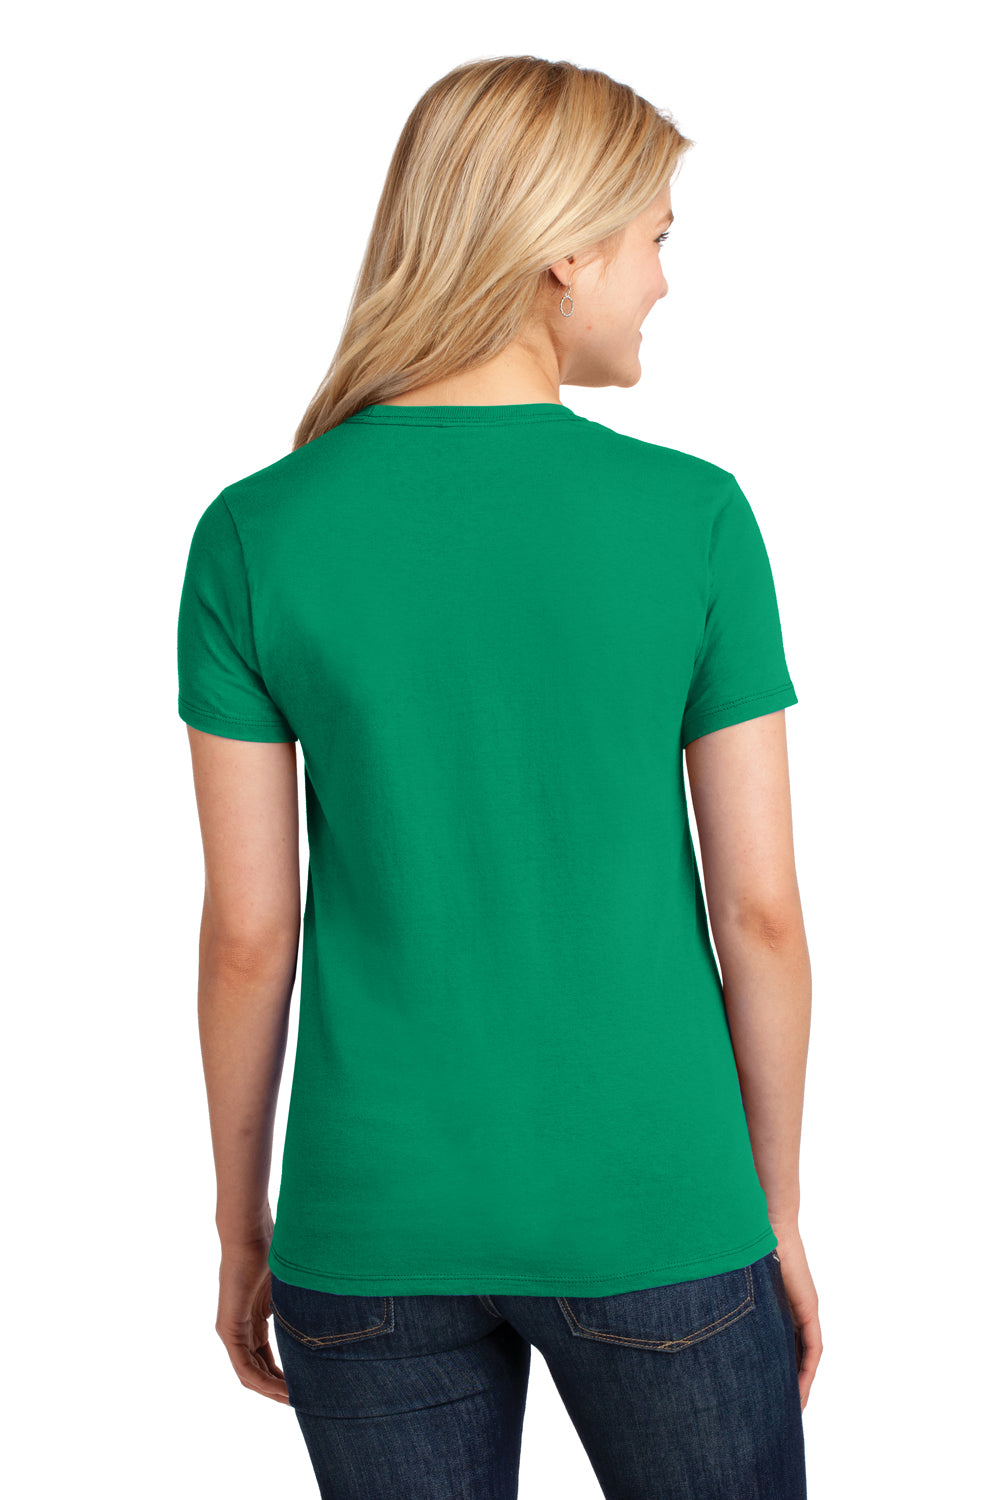 Port & Company LPC54 Womens Core Short Sleeve Crewneck T-Shirt Kelly Green Back